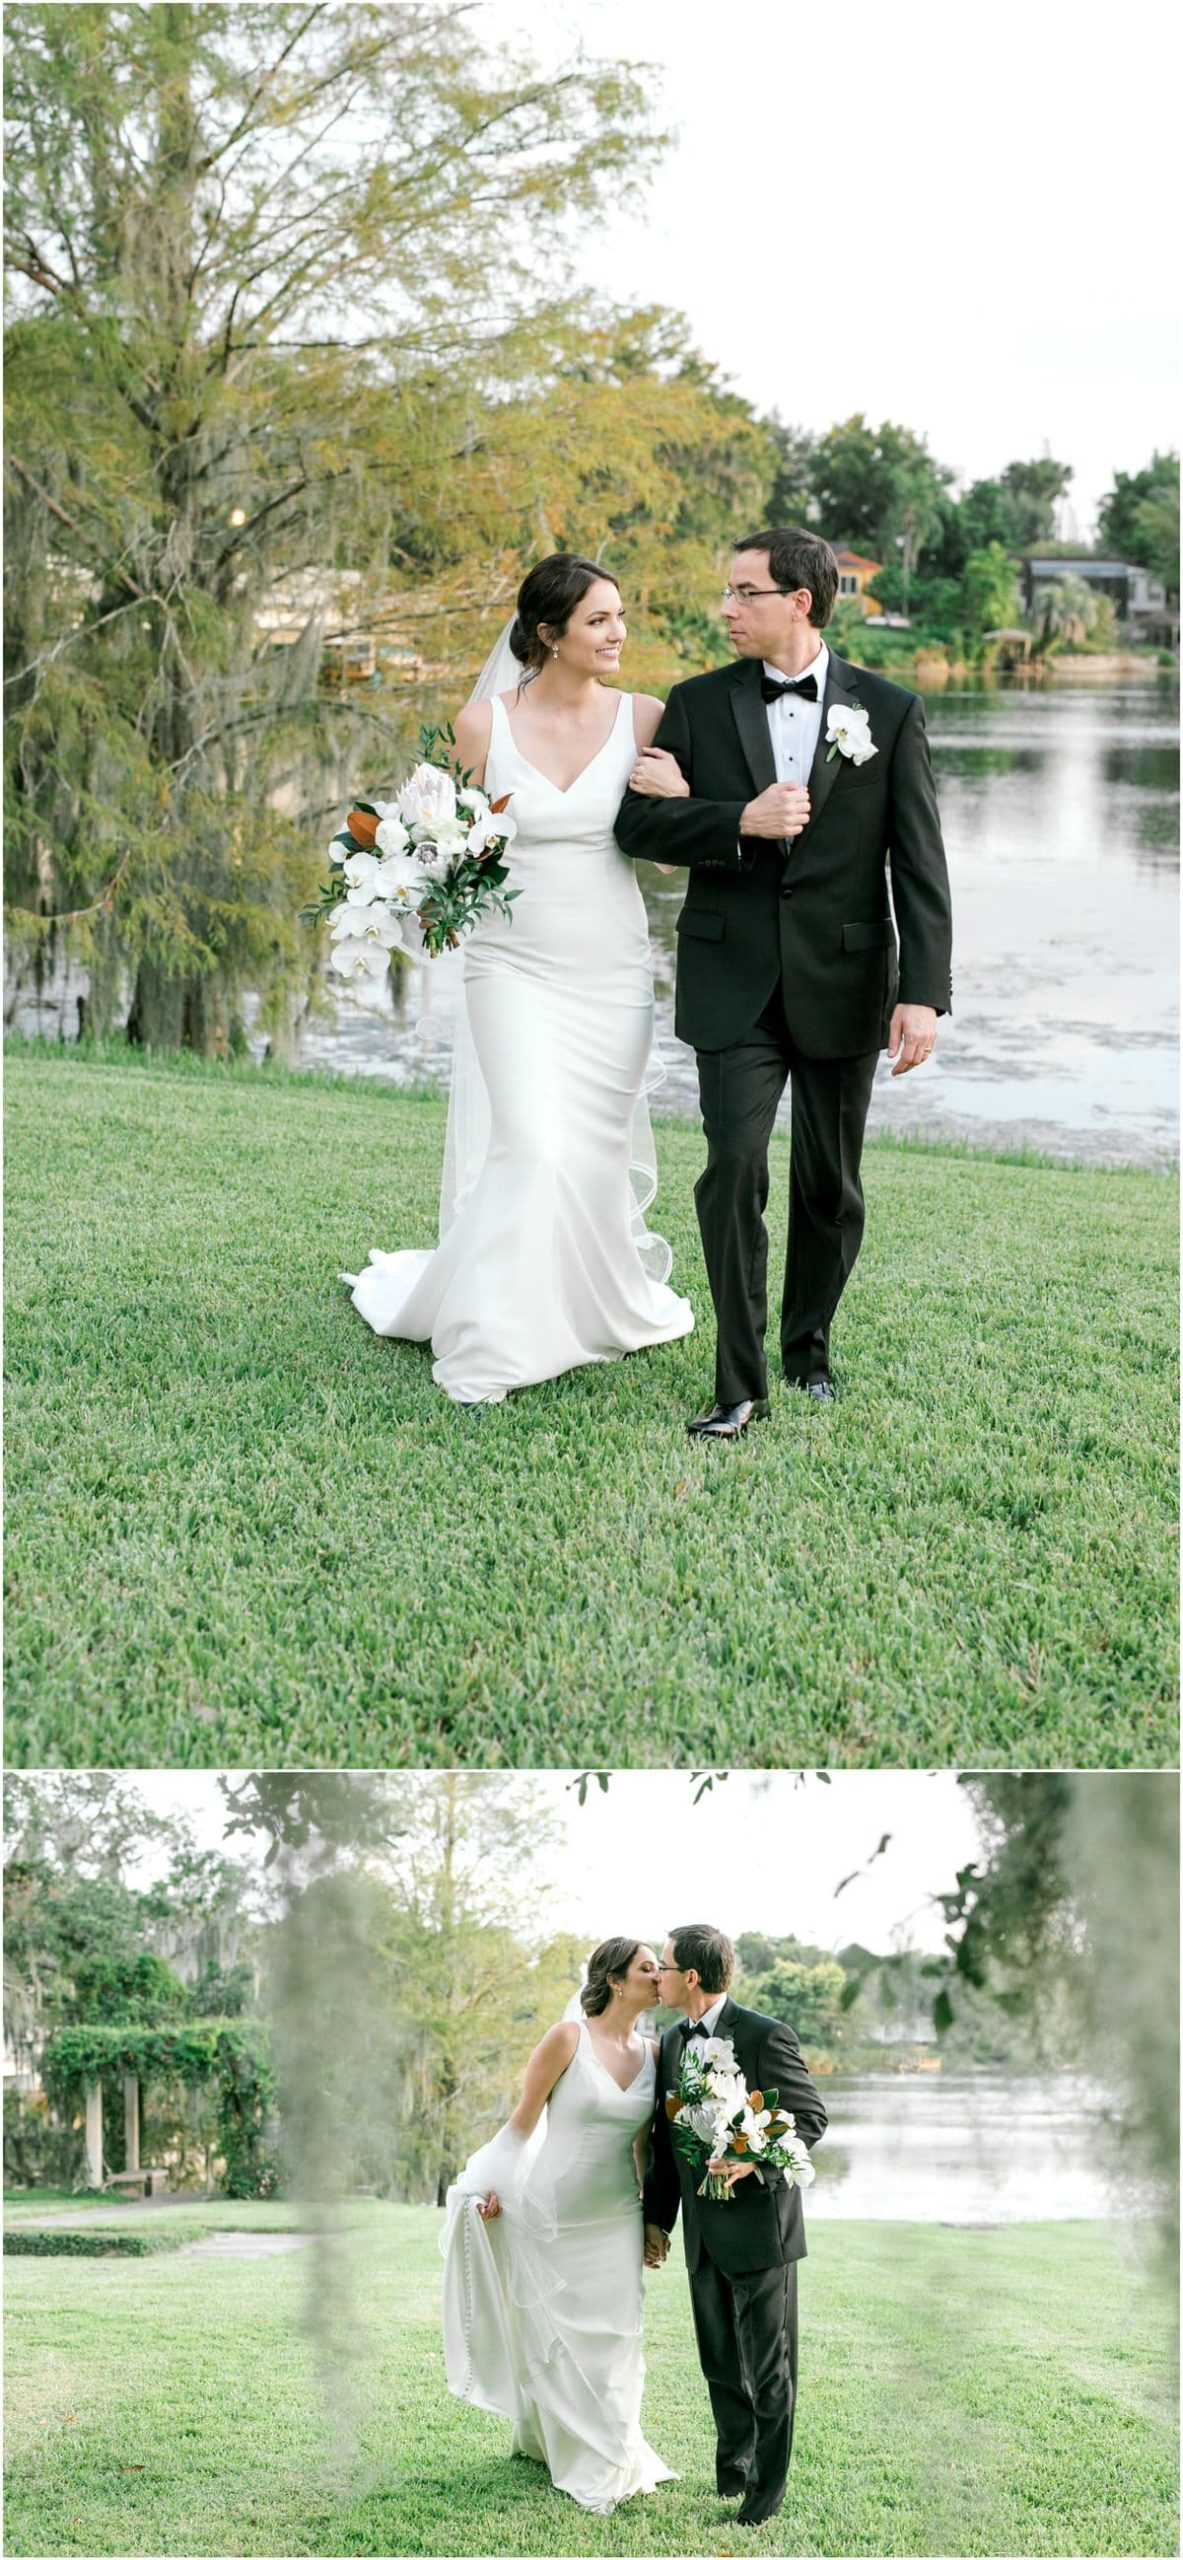 Bride and groom walking next to lake at wedding